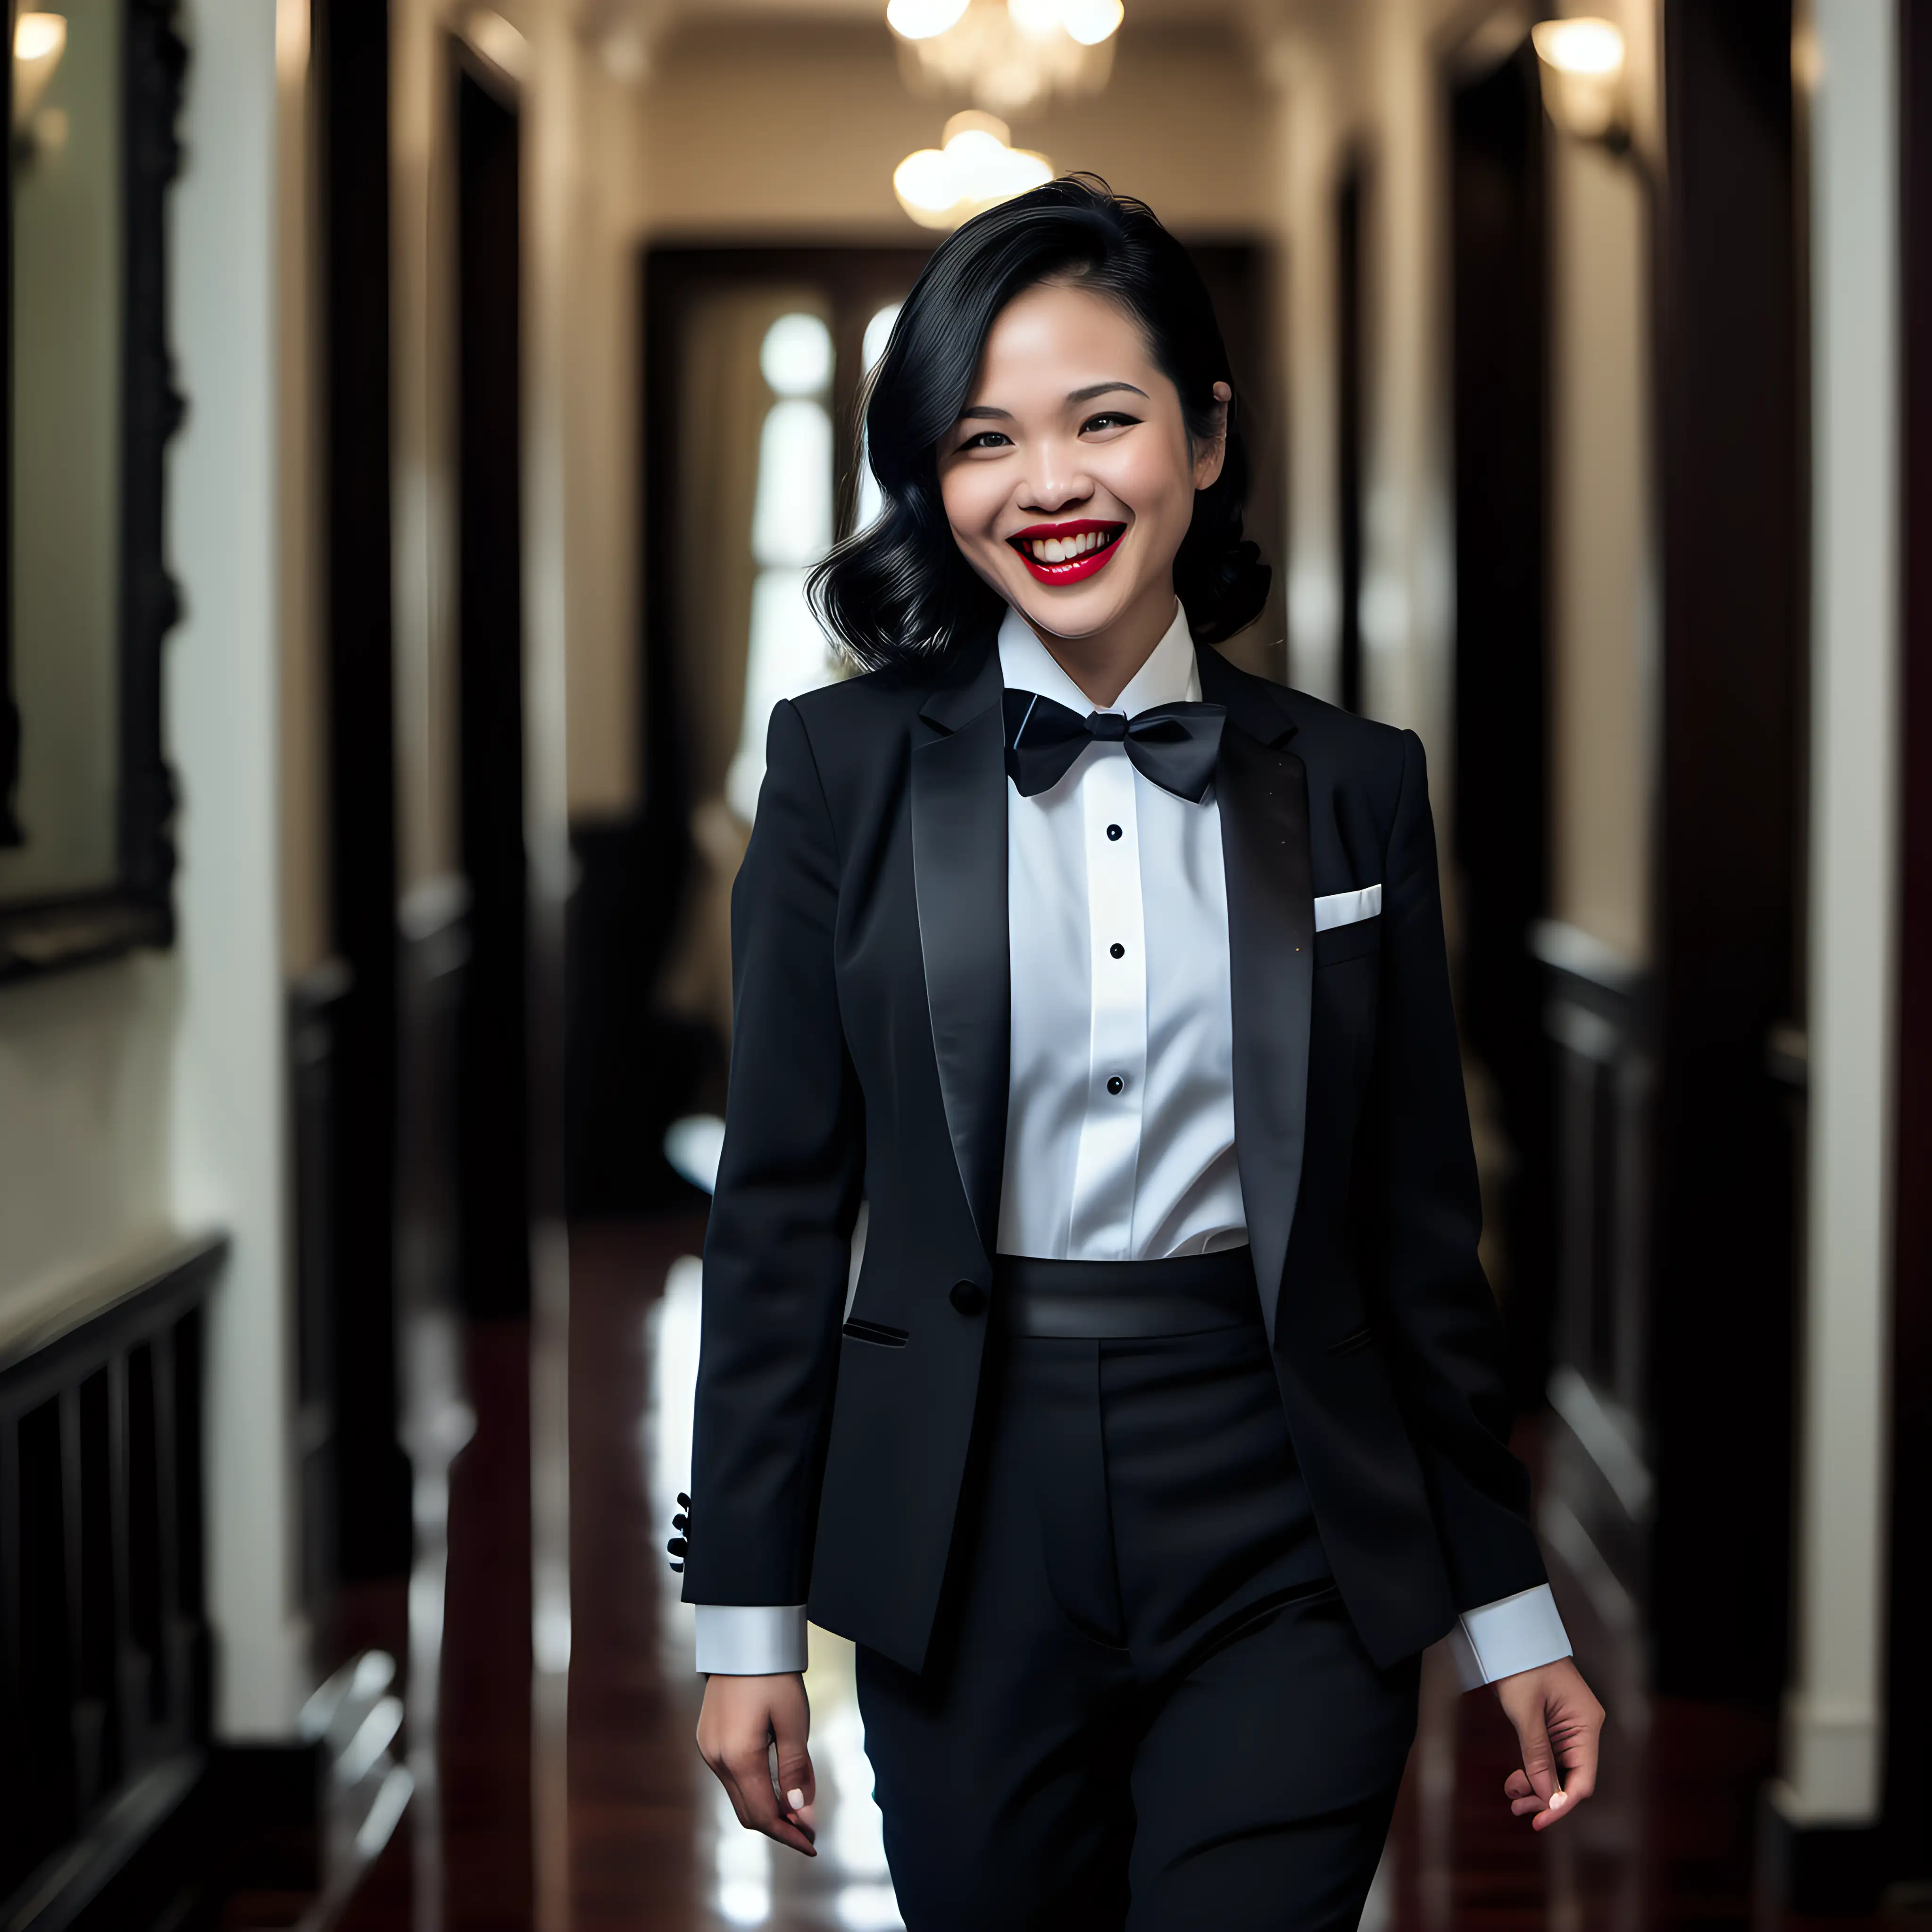 Elegant-Vietnamese-Woman-in-Tuxedo-Walking-Through-Mansion-Hallway